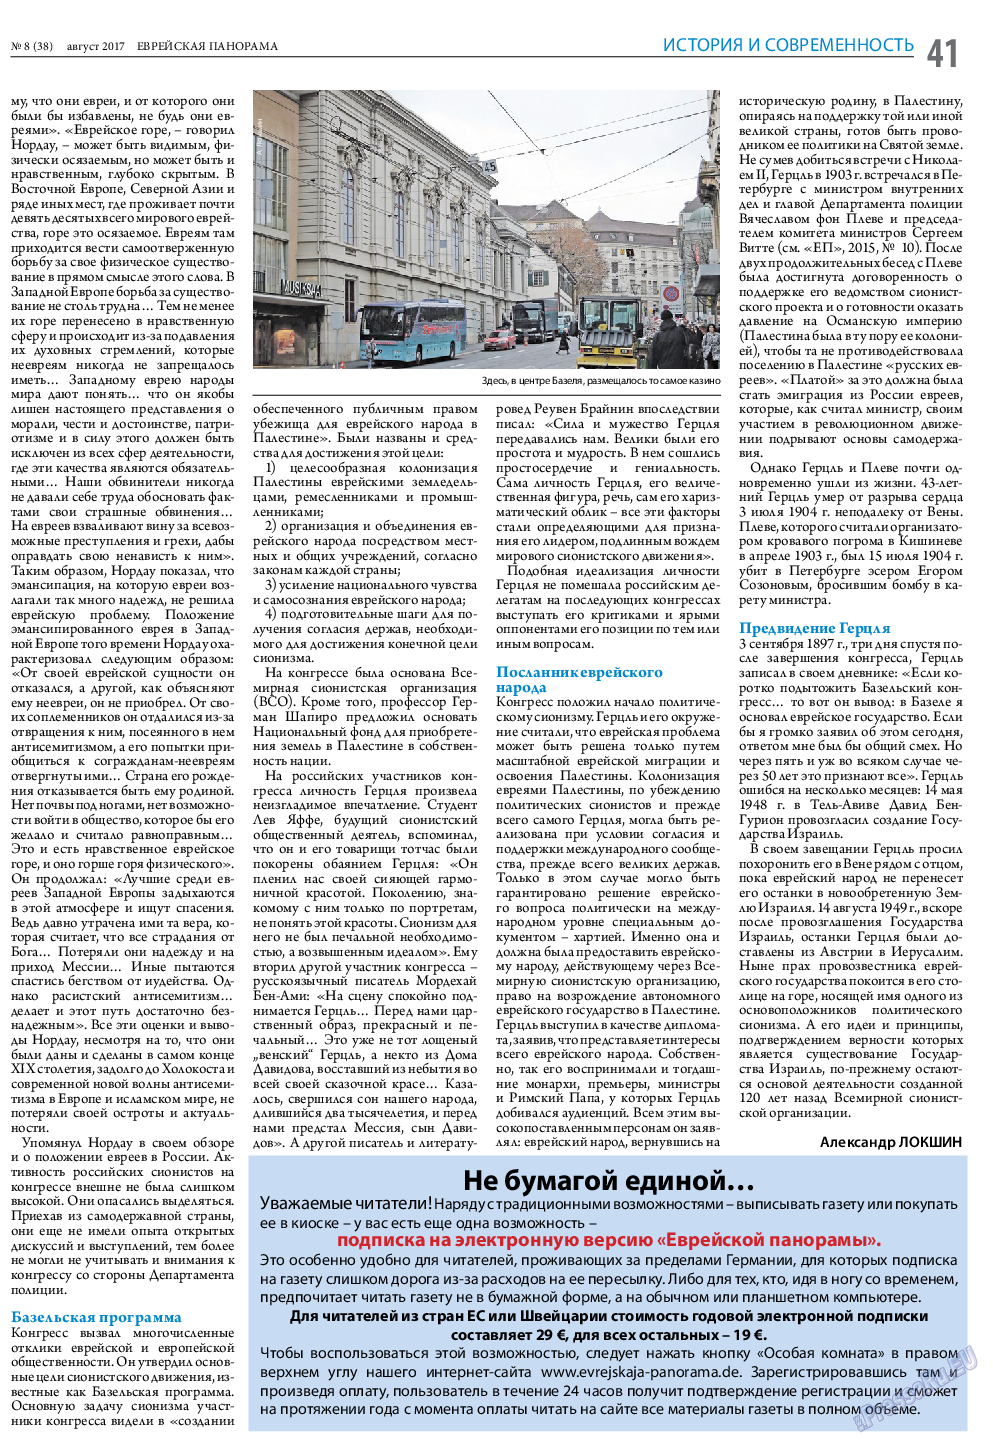 Еврейская панорама, газета. 2017 №8 стр.41